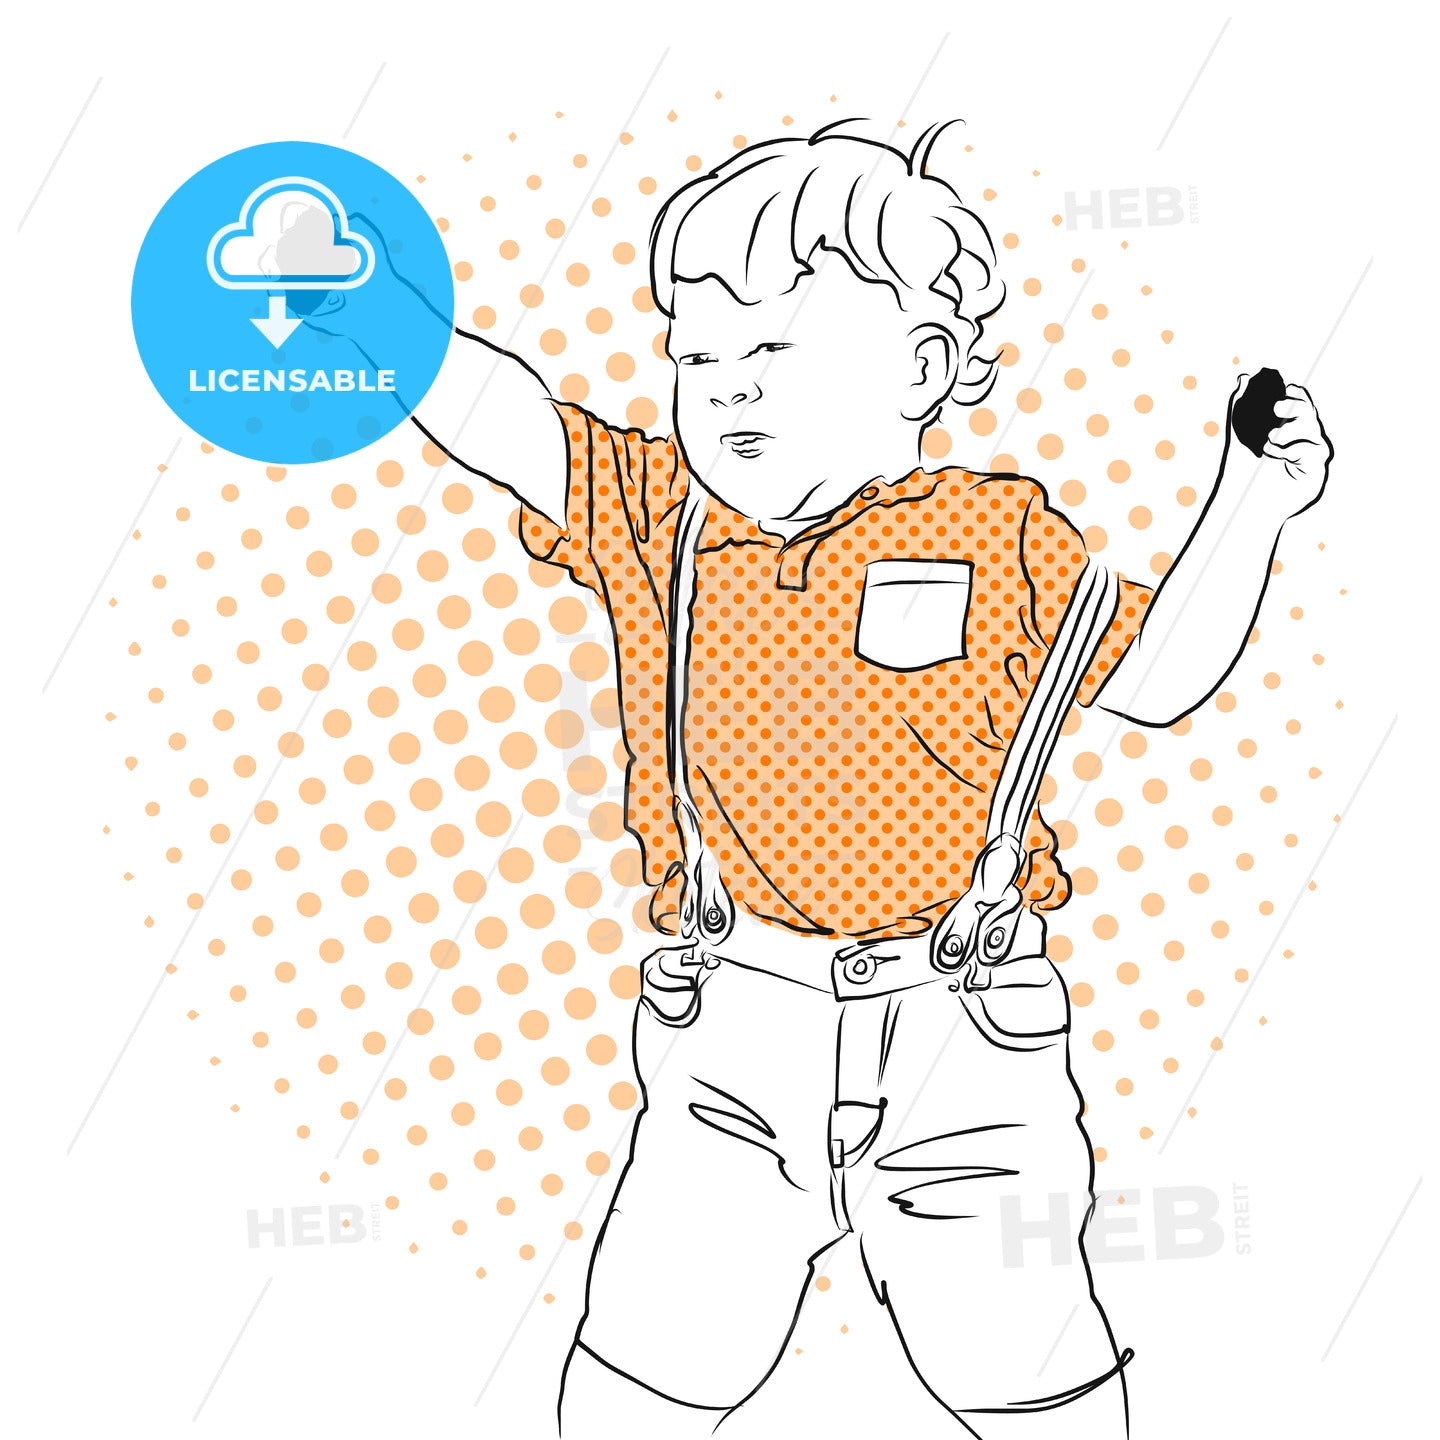 Little cute boy throw rocks. – instant download